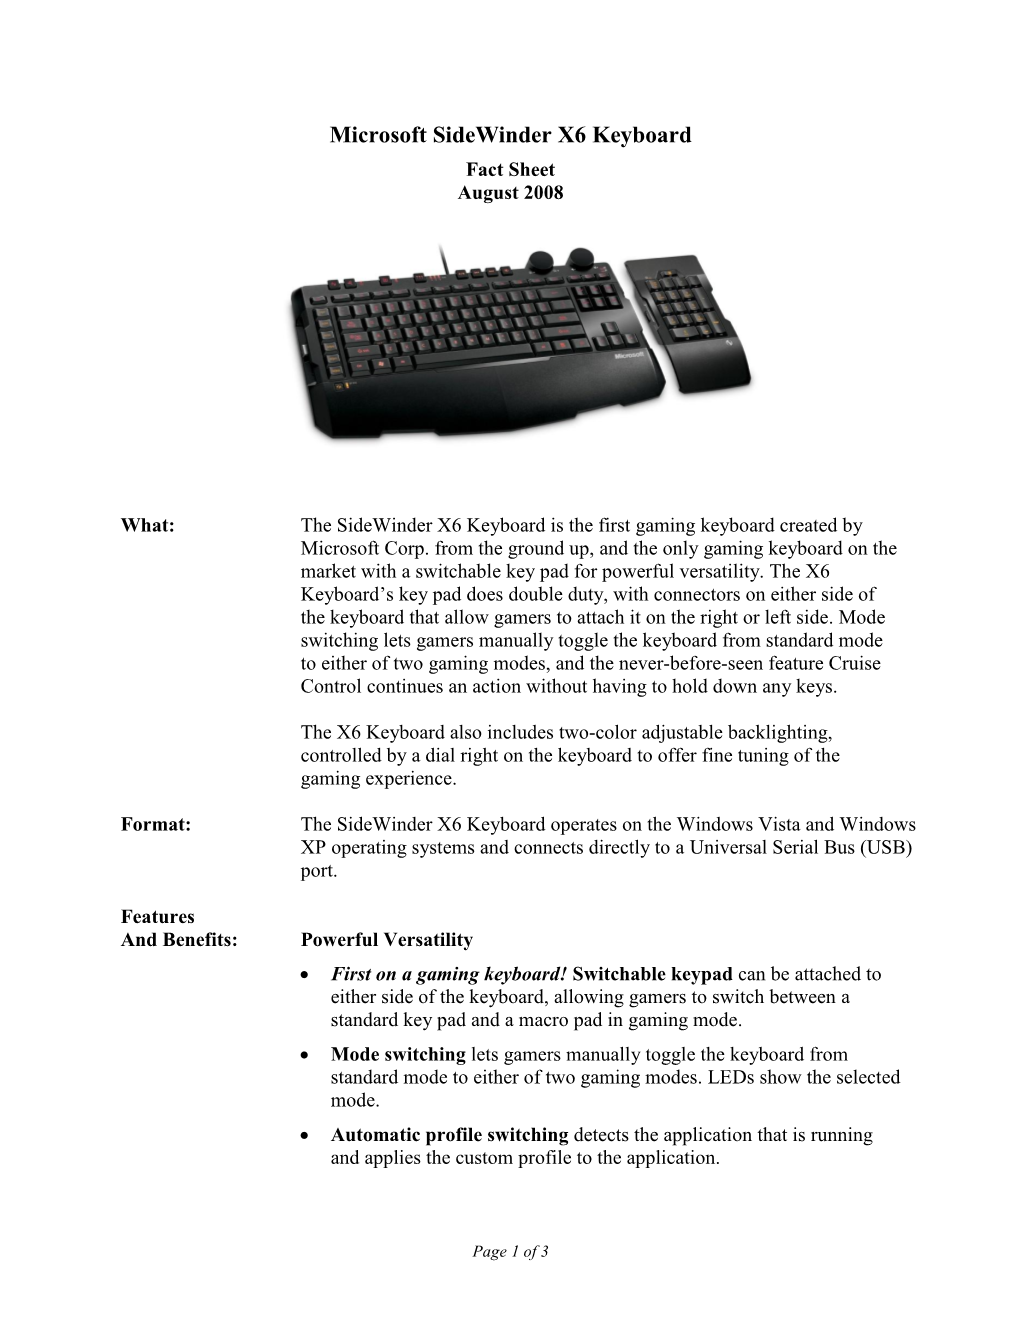 Microsoft Sidewinder X6 Keyboard Fact Sheet August 2008